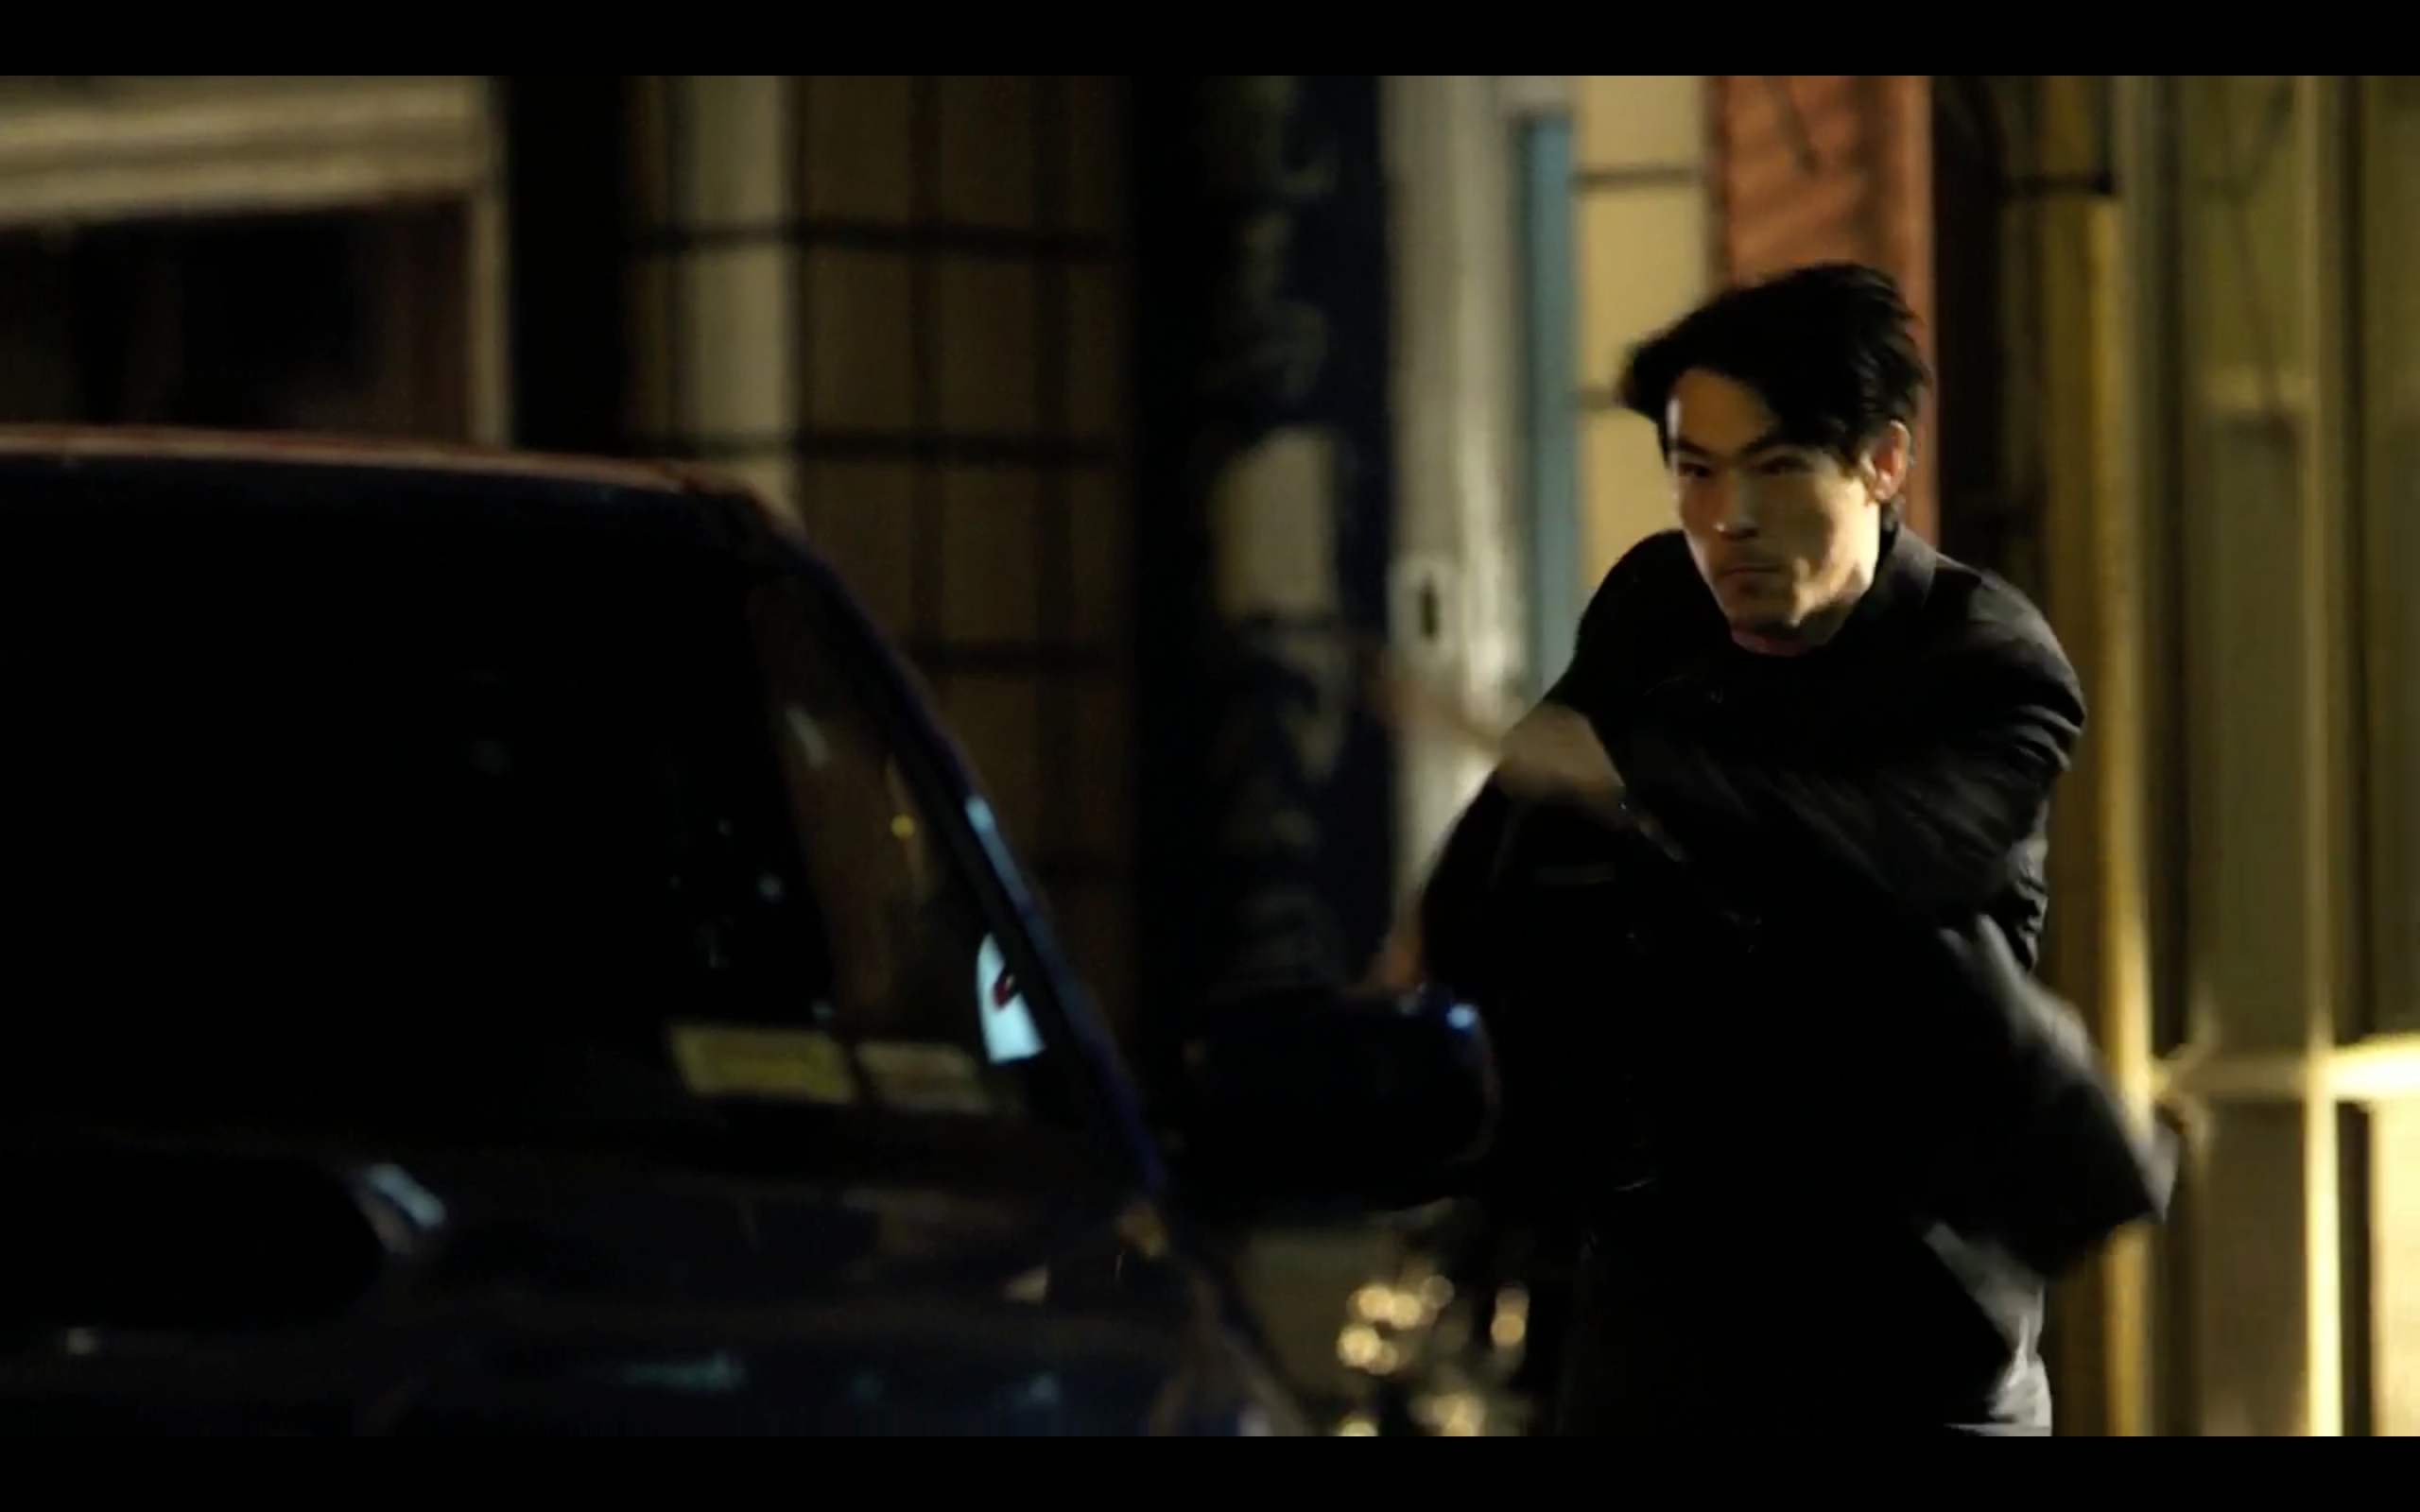 James Chen in CBS Blue Bloods 'Chinatown' episode as Nelson Chiu. http://www.cbs.com/shows/blue_bloods/